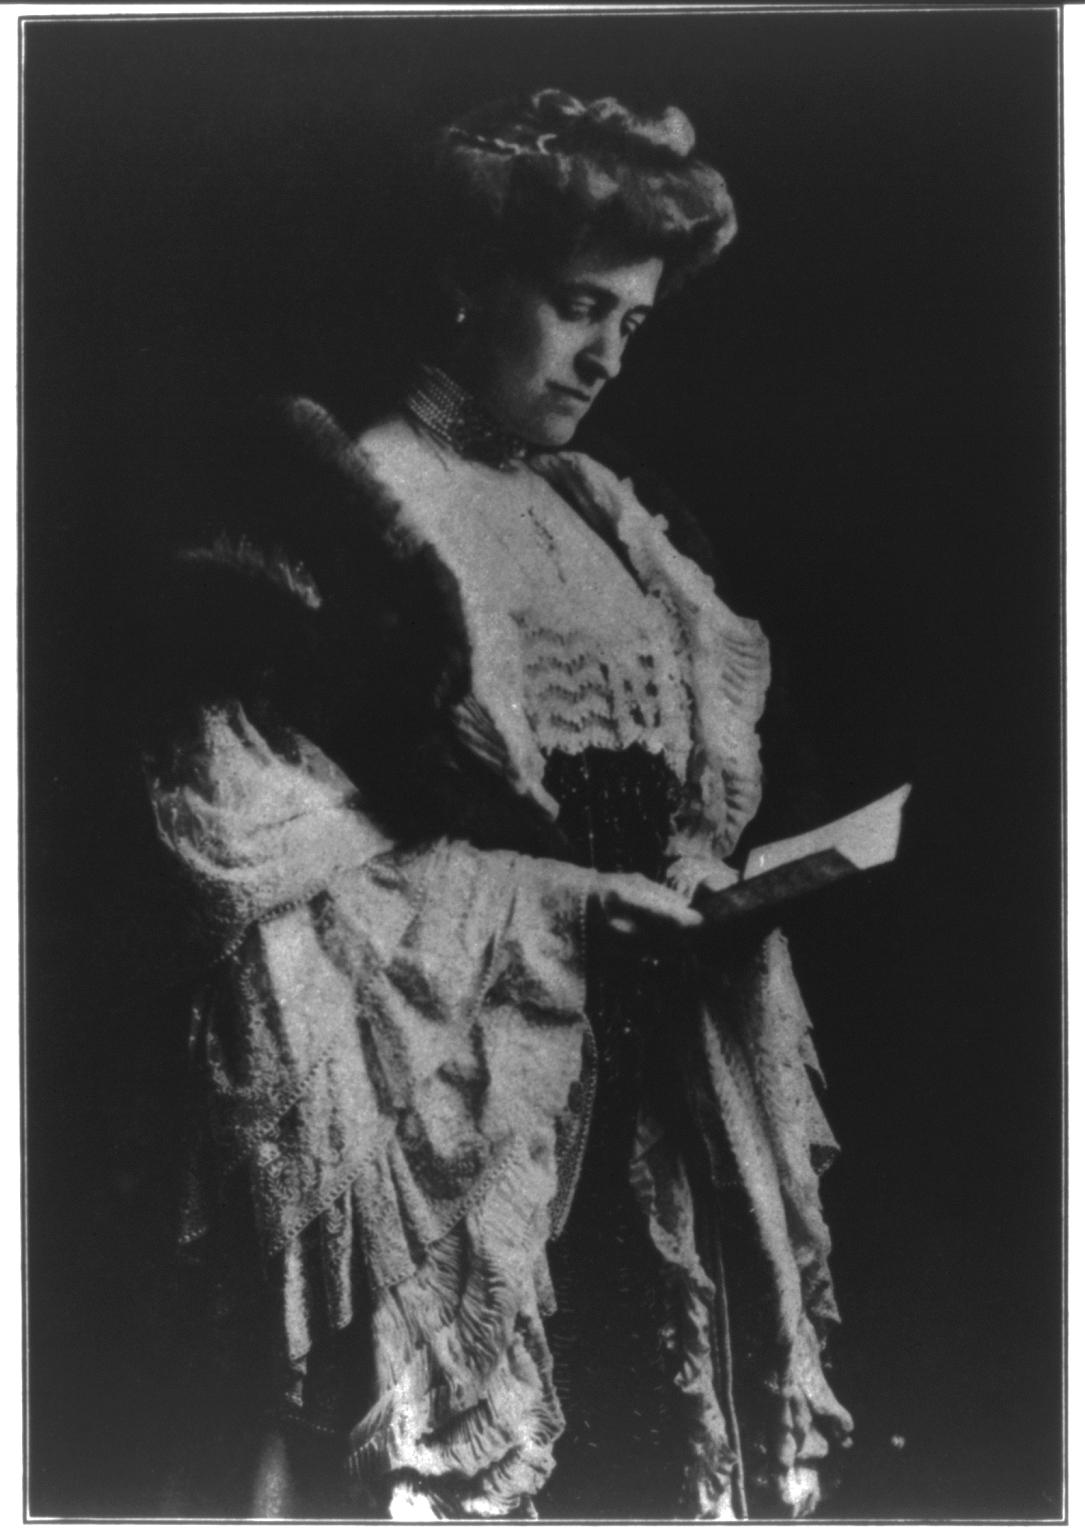 A photographic portrait of Edith Wharton.